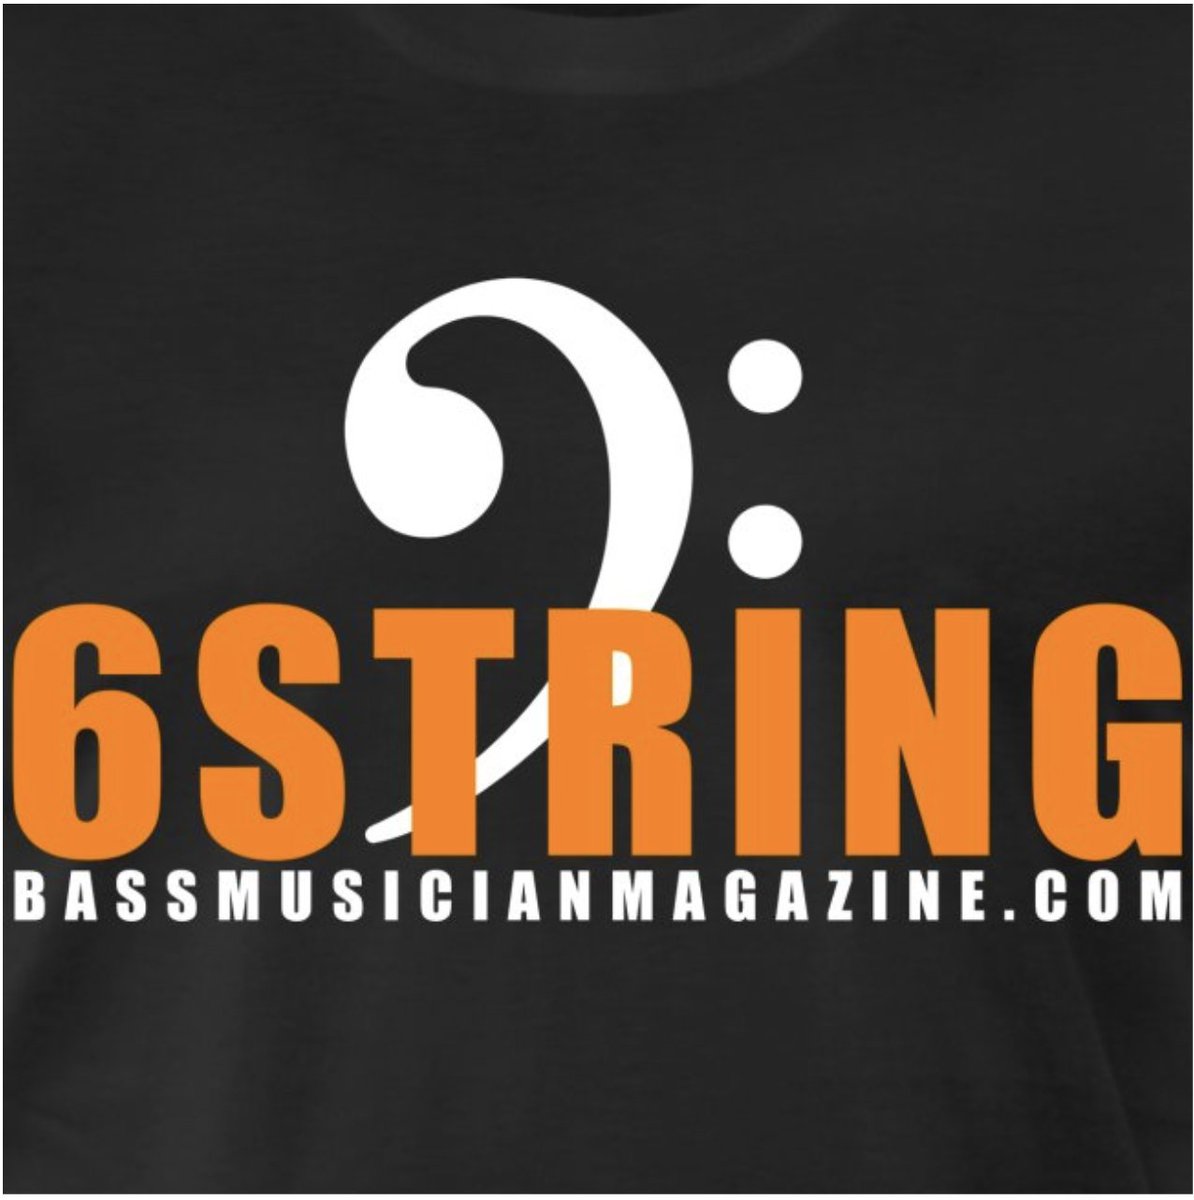 Bass Clef 6-String Women's Premium T-Shirt Sizes S-3XL loom.ly/UQj3Dls #bassmusicianmag #bassmusician #bassplayer #bassguitarist #electricbassist #bassguitars #bassguitar #electricbass #bassist #bass #bassporn #bajo #baixo #baixos #bassline #ad